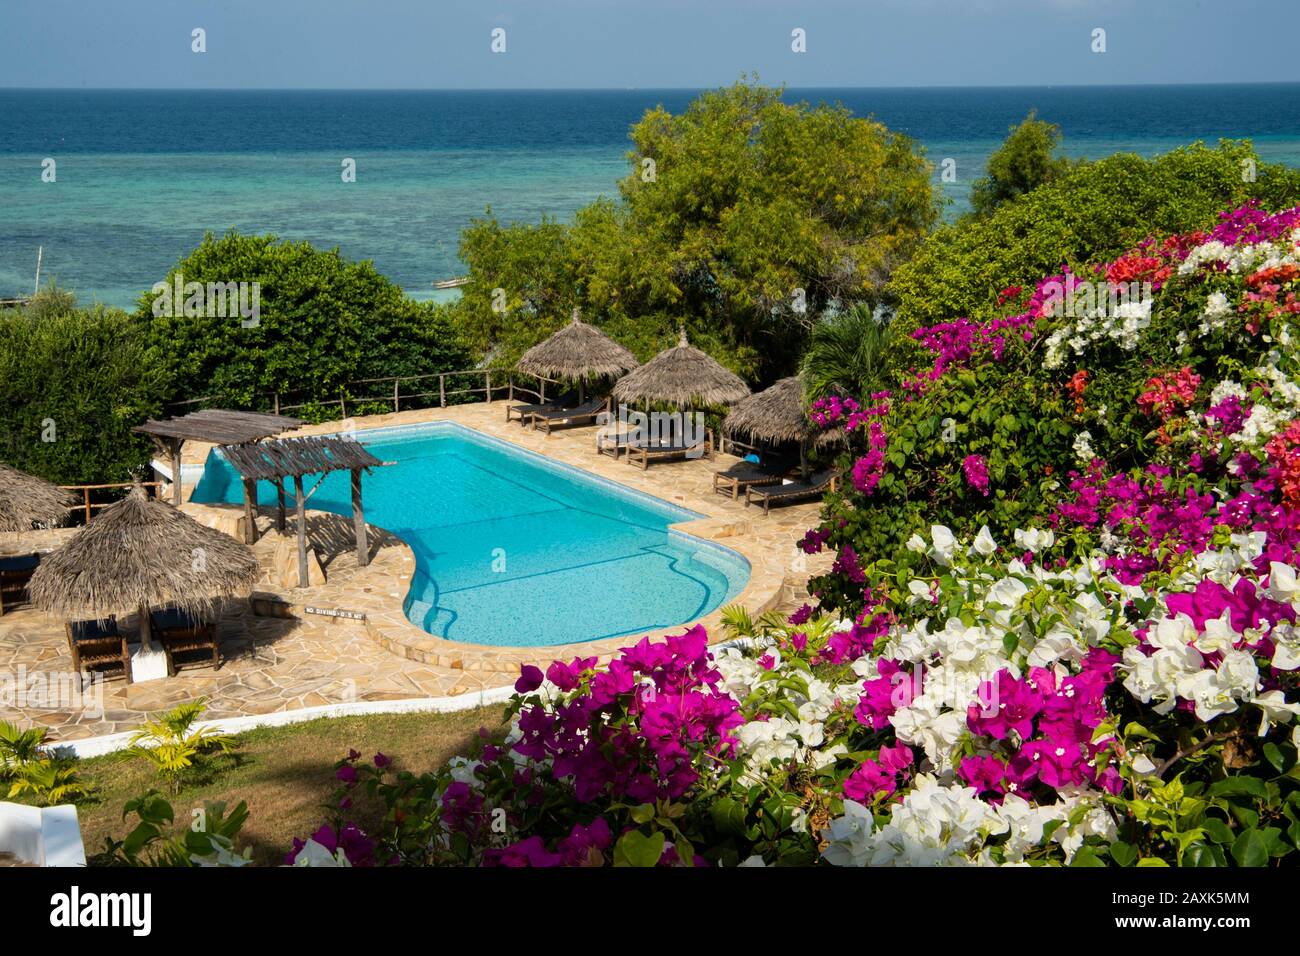 The Manta Resort, swimming pool, Pemba Island, Zanzibar Archipelago, Tanzania Stock Photo